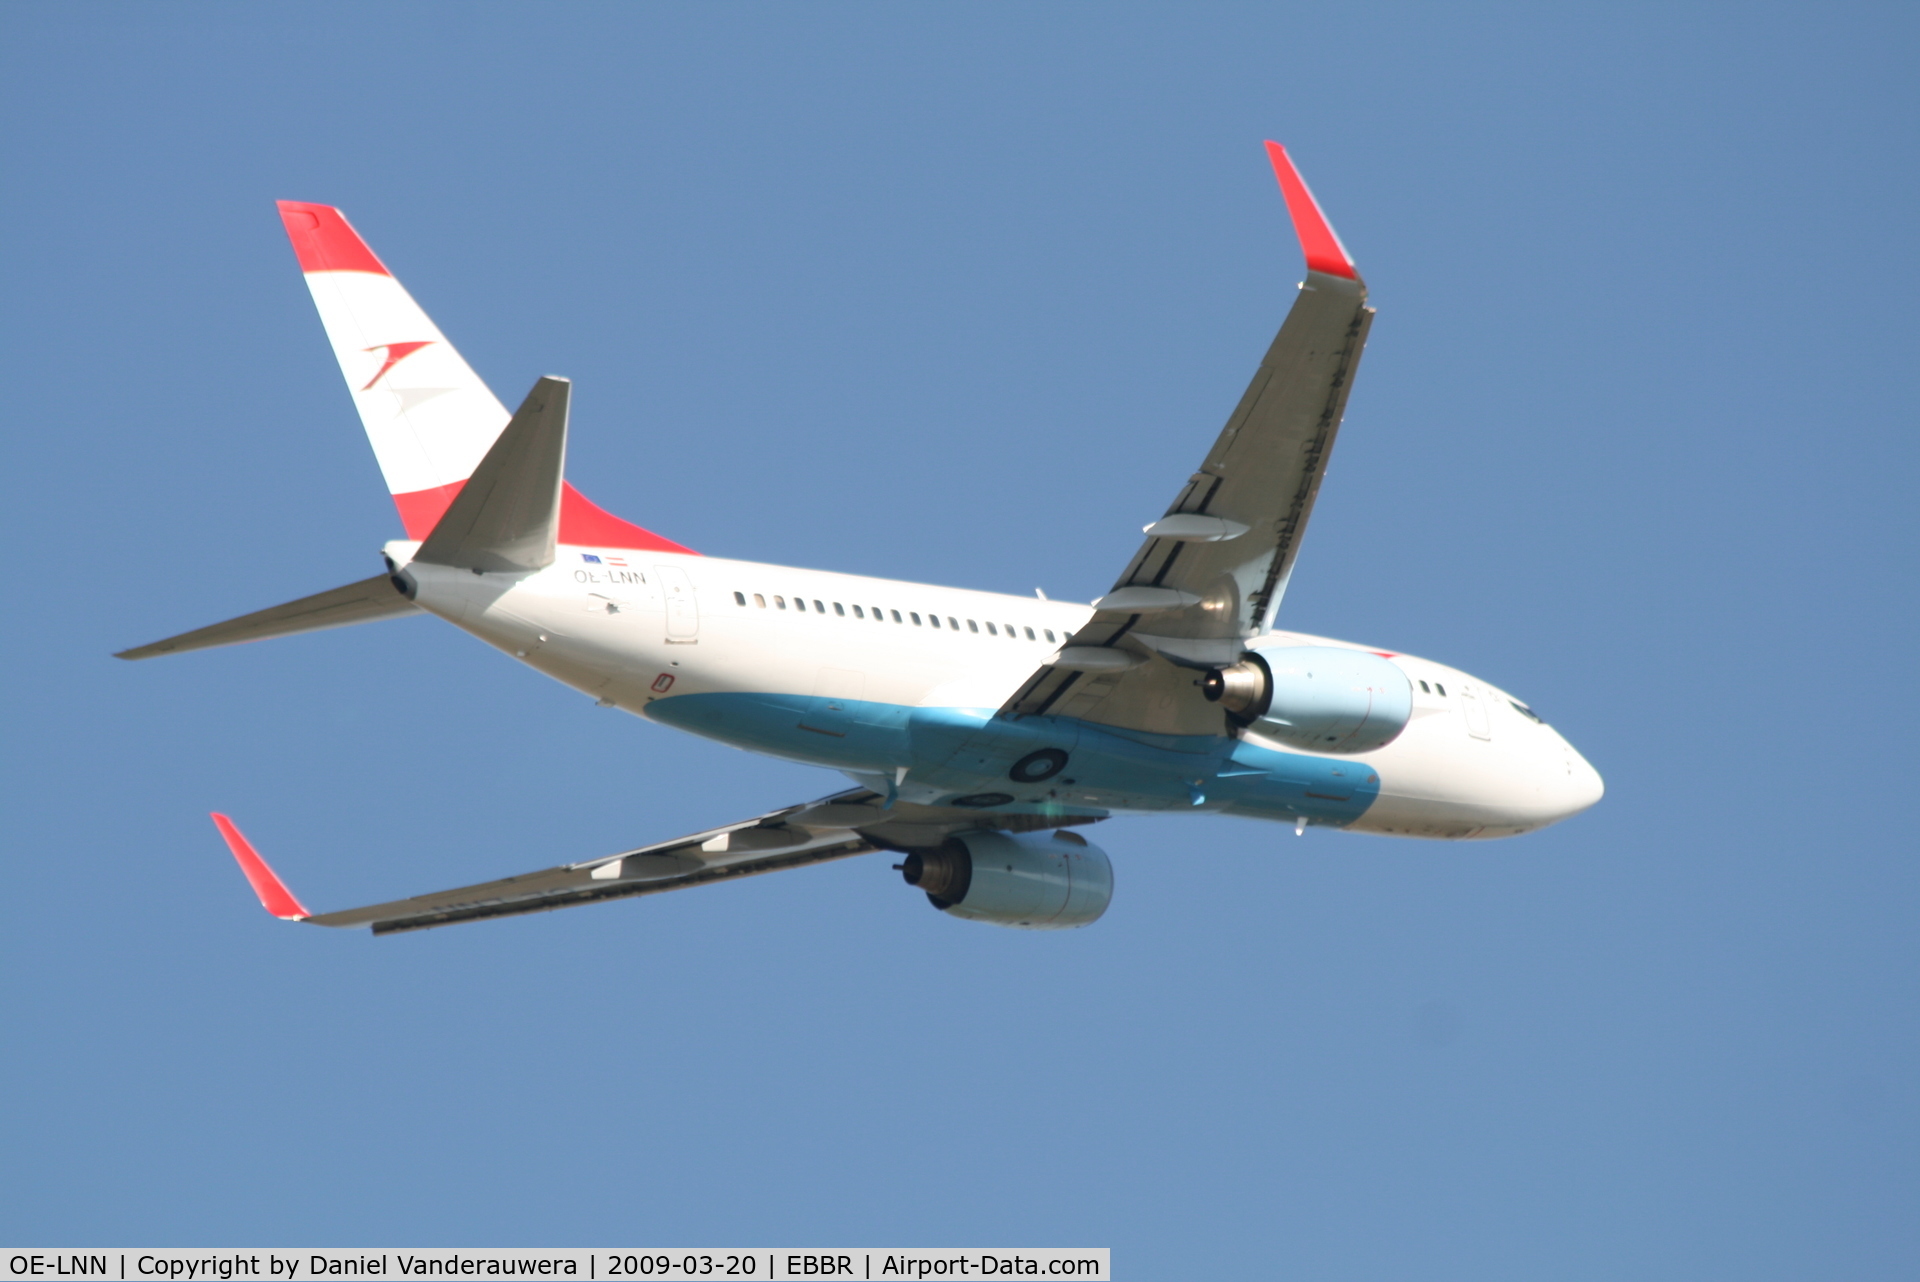 OE-LNN, 2000 Boeing 737-7Z9 C/N 30418, Flight OS352 is taking off from RWY 07R